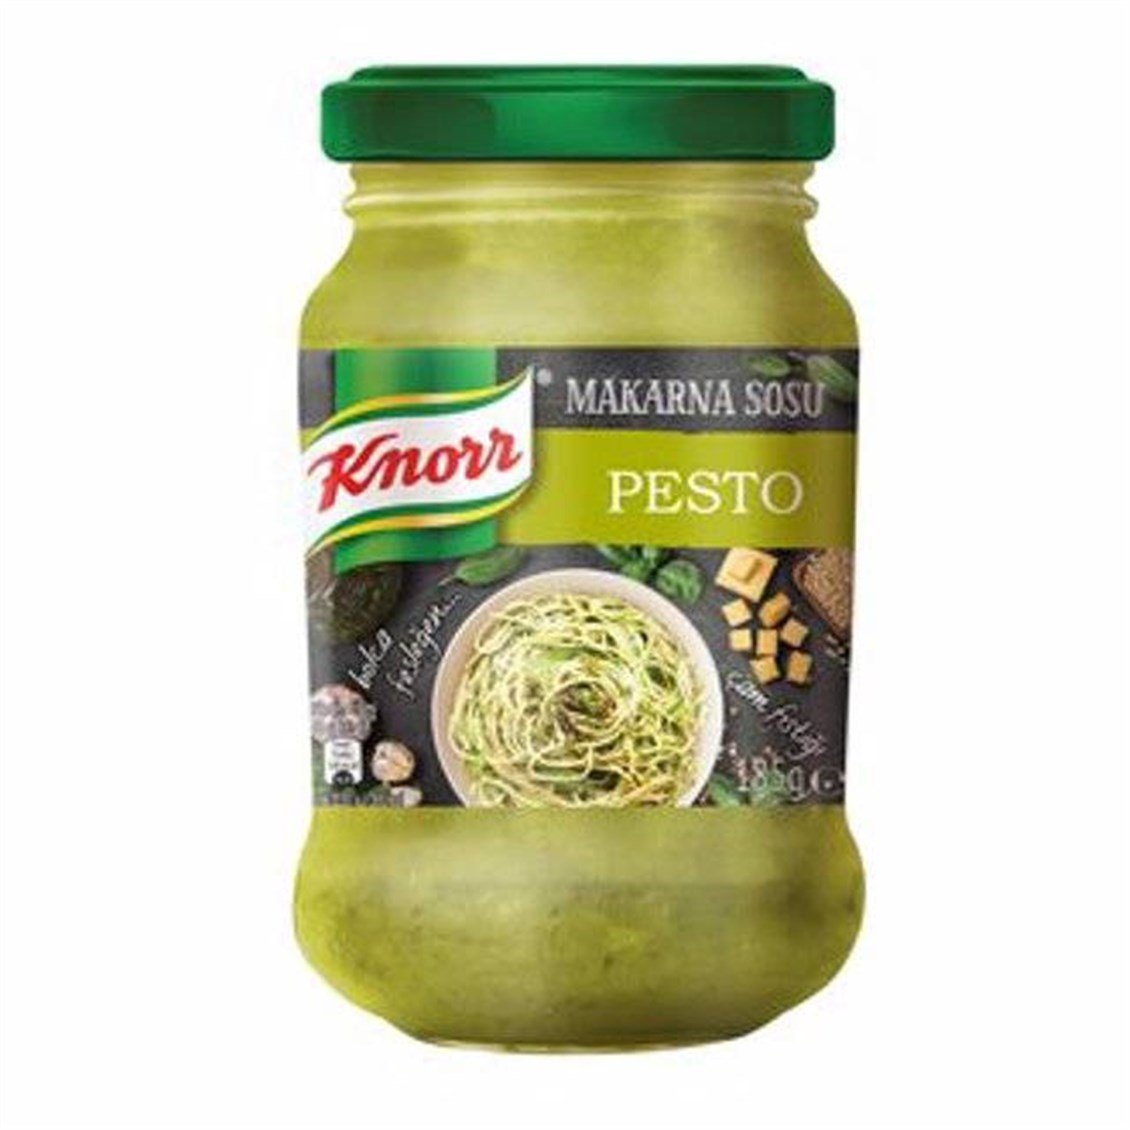 Knorr Pesto Verde Makarna Sosu 185 gr - Onur Market